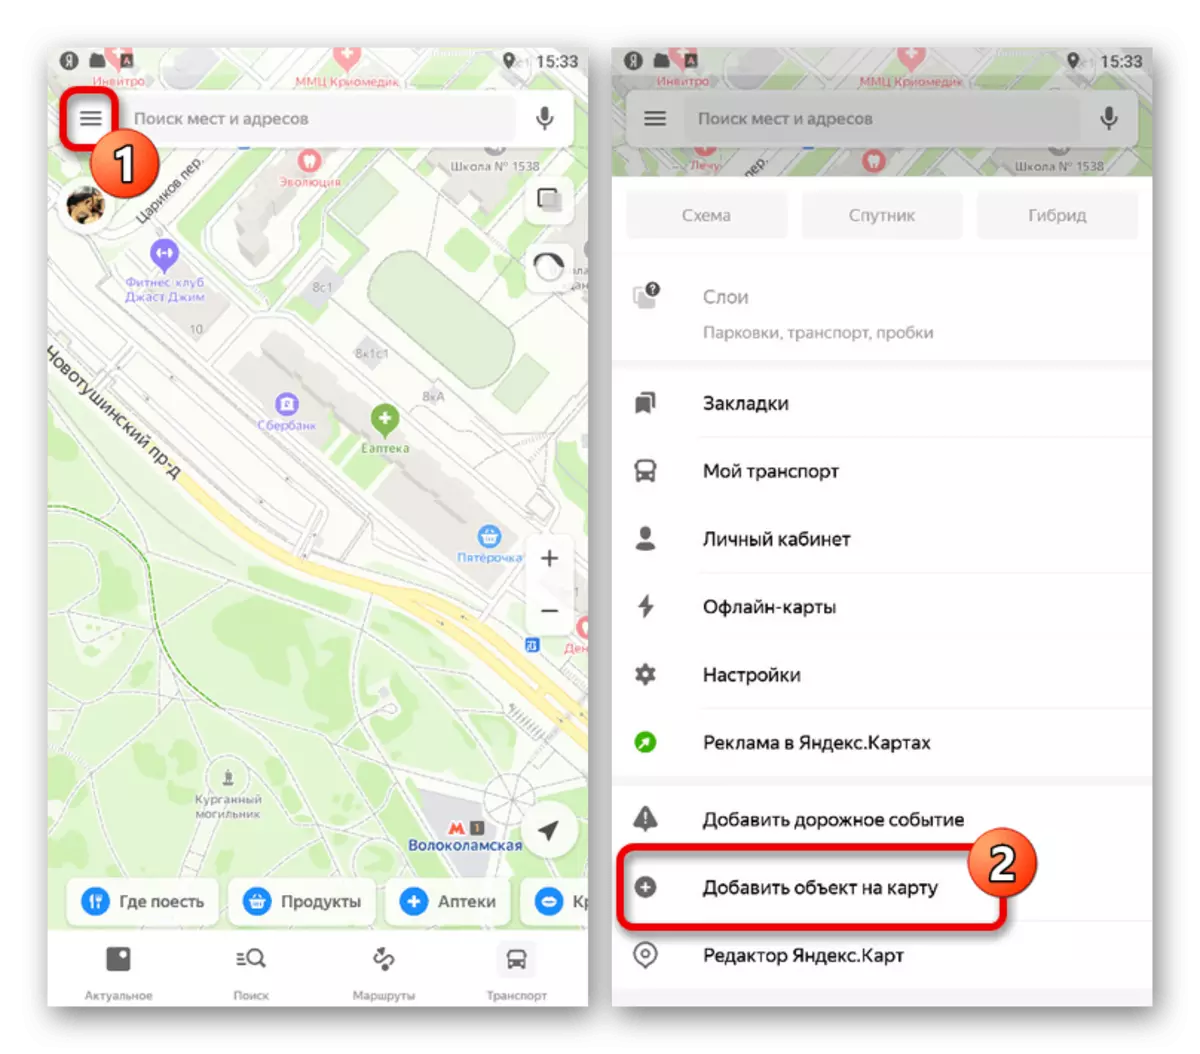 Yandex.maps એપ્લિકેશનમાં ગુમ થયેલ ઑબ્જેક્ટ ઉમેરવા માટે સંક્રમણ